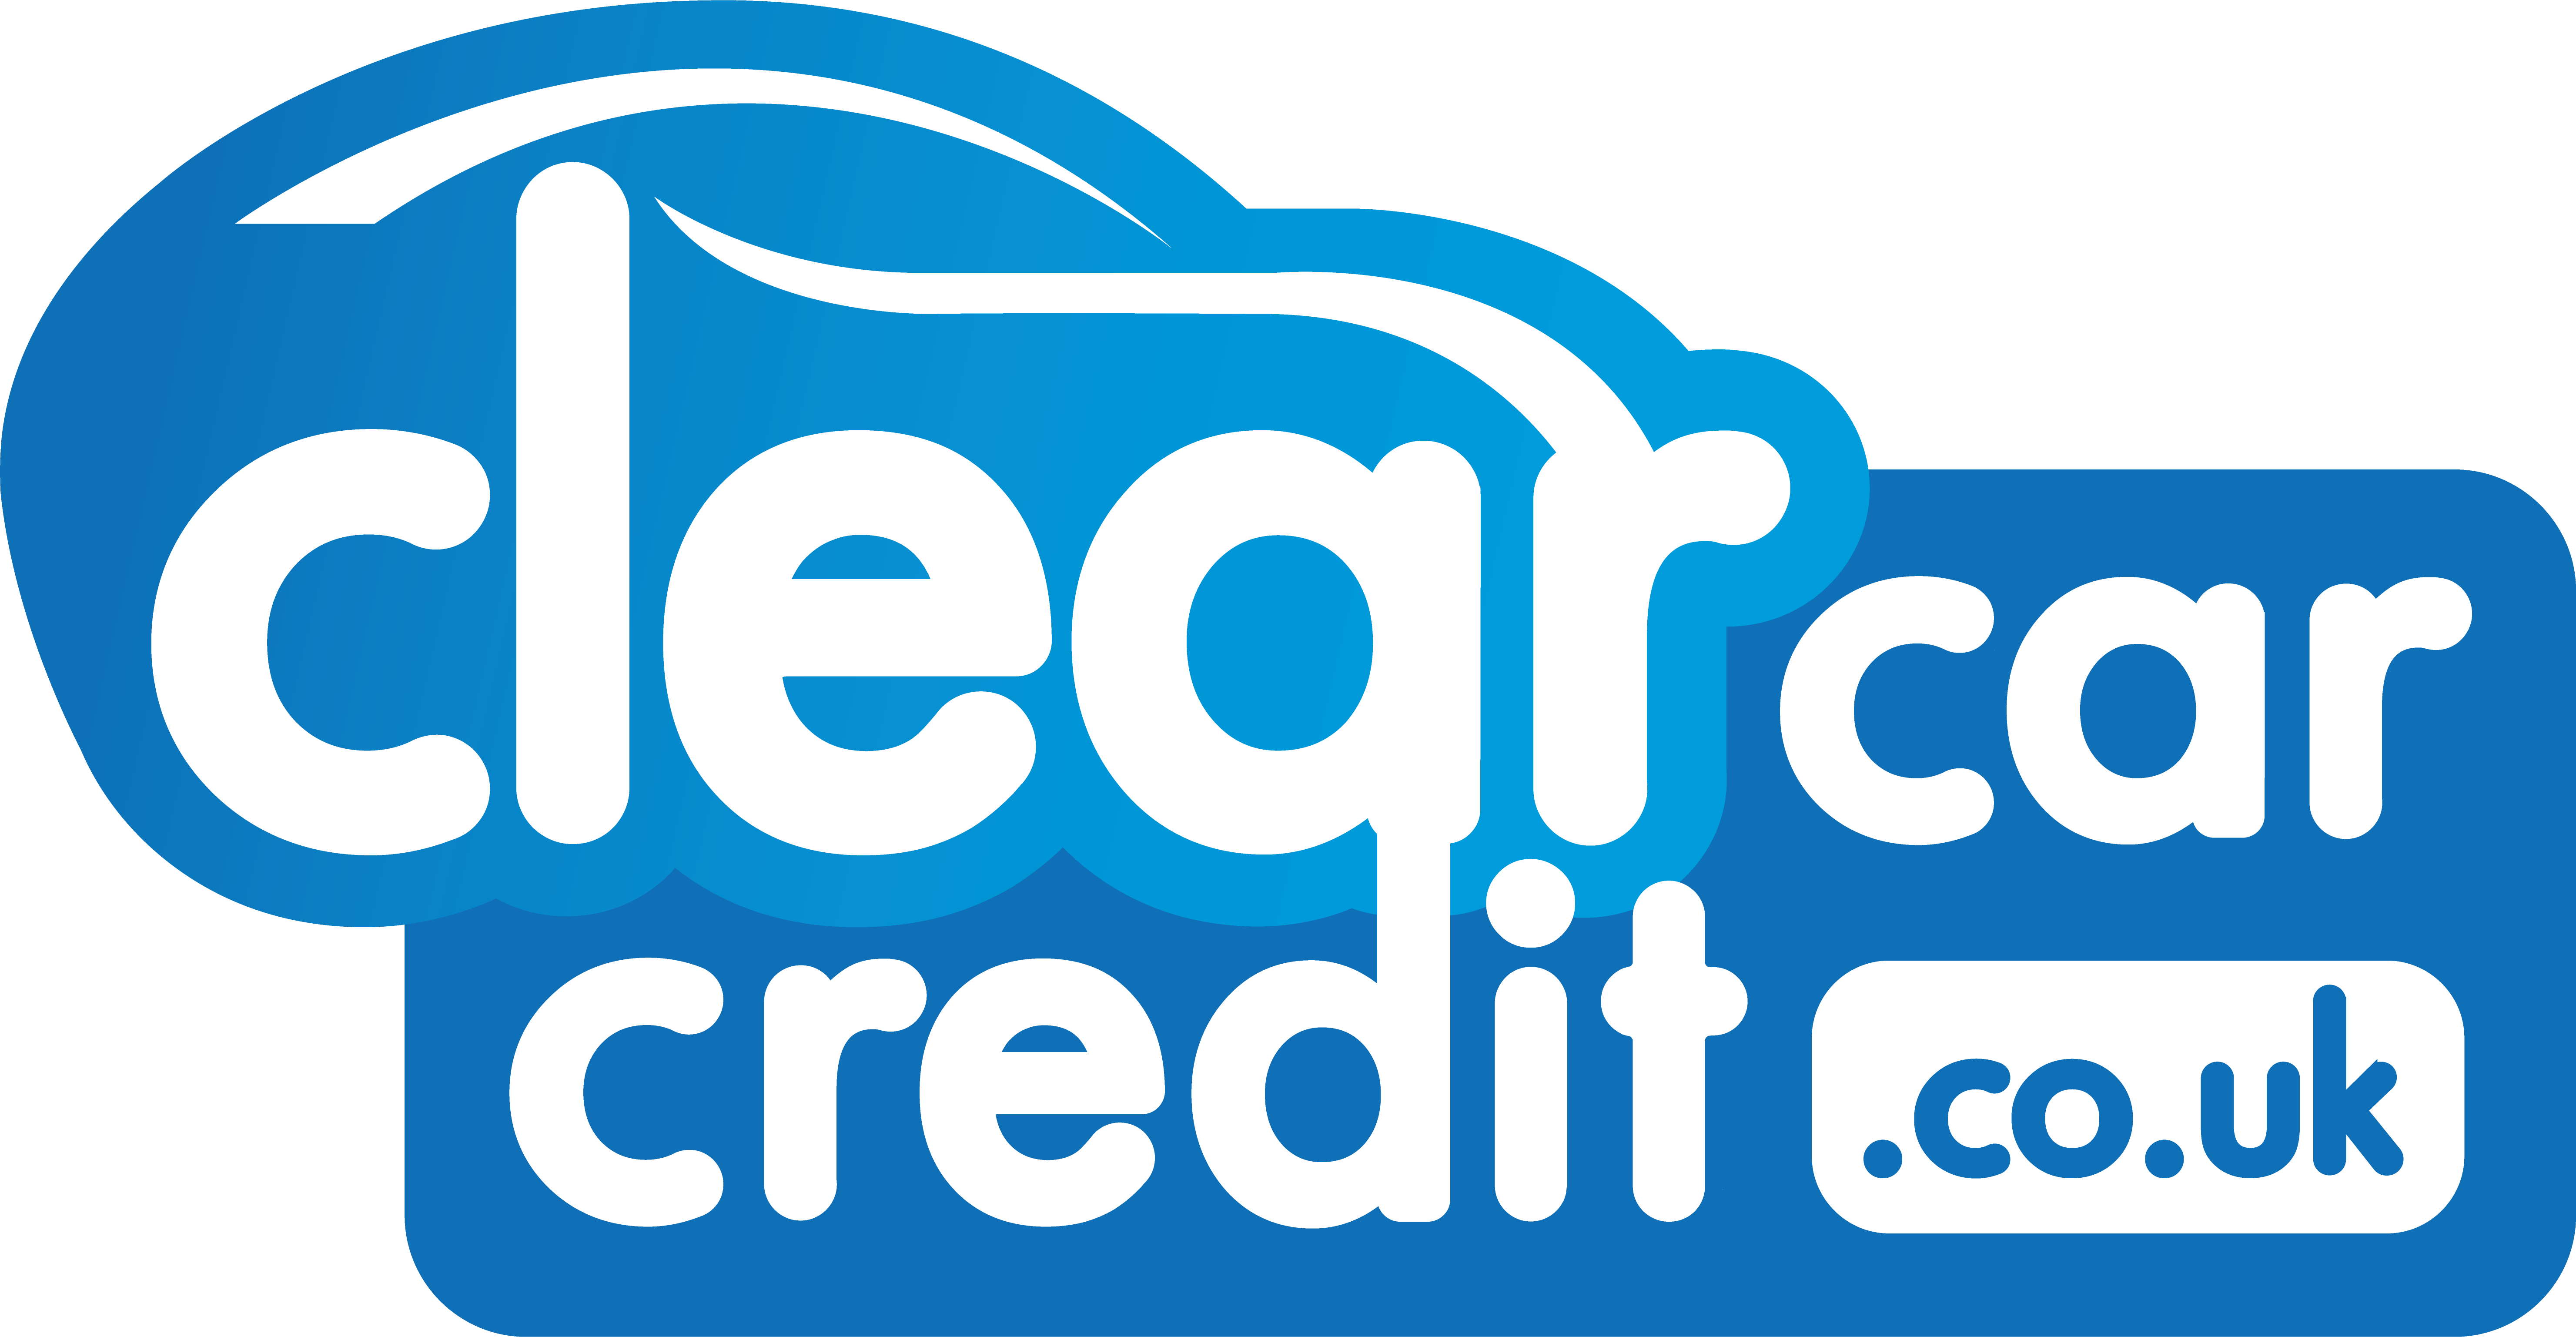 Clear логотип. Car credit logo PNG. E-car Finance logo. Rapid Finance. Clear car